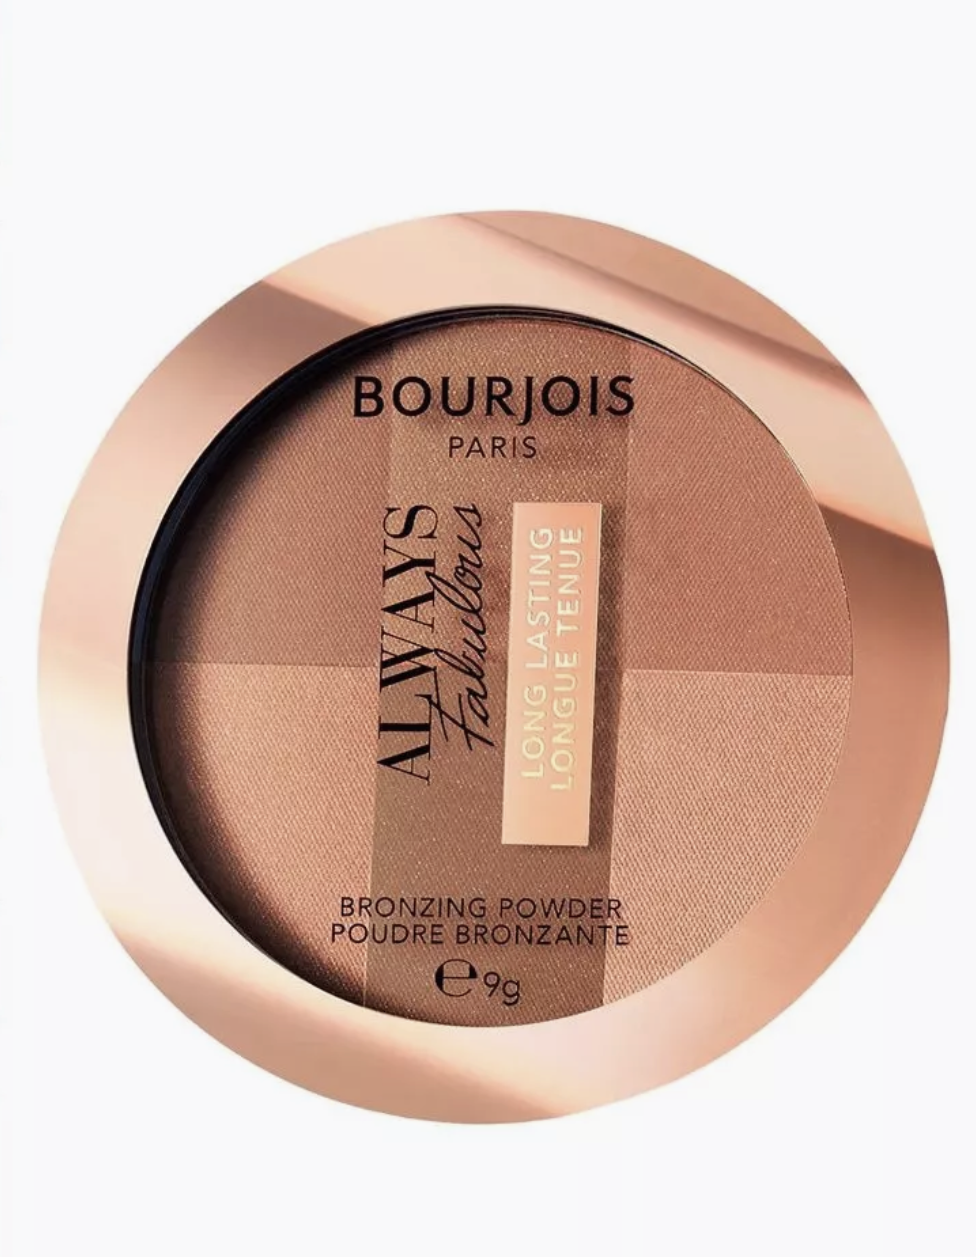    / Bourjois Paris -    Always Fabulous bronzing powder  002 Dark 9 